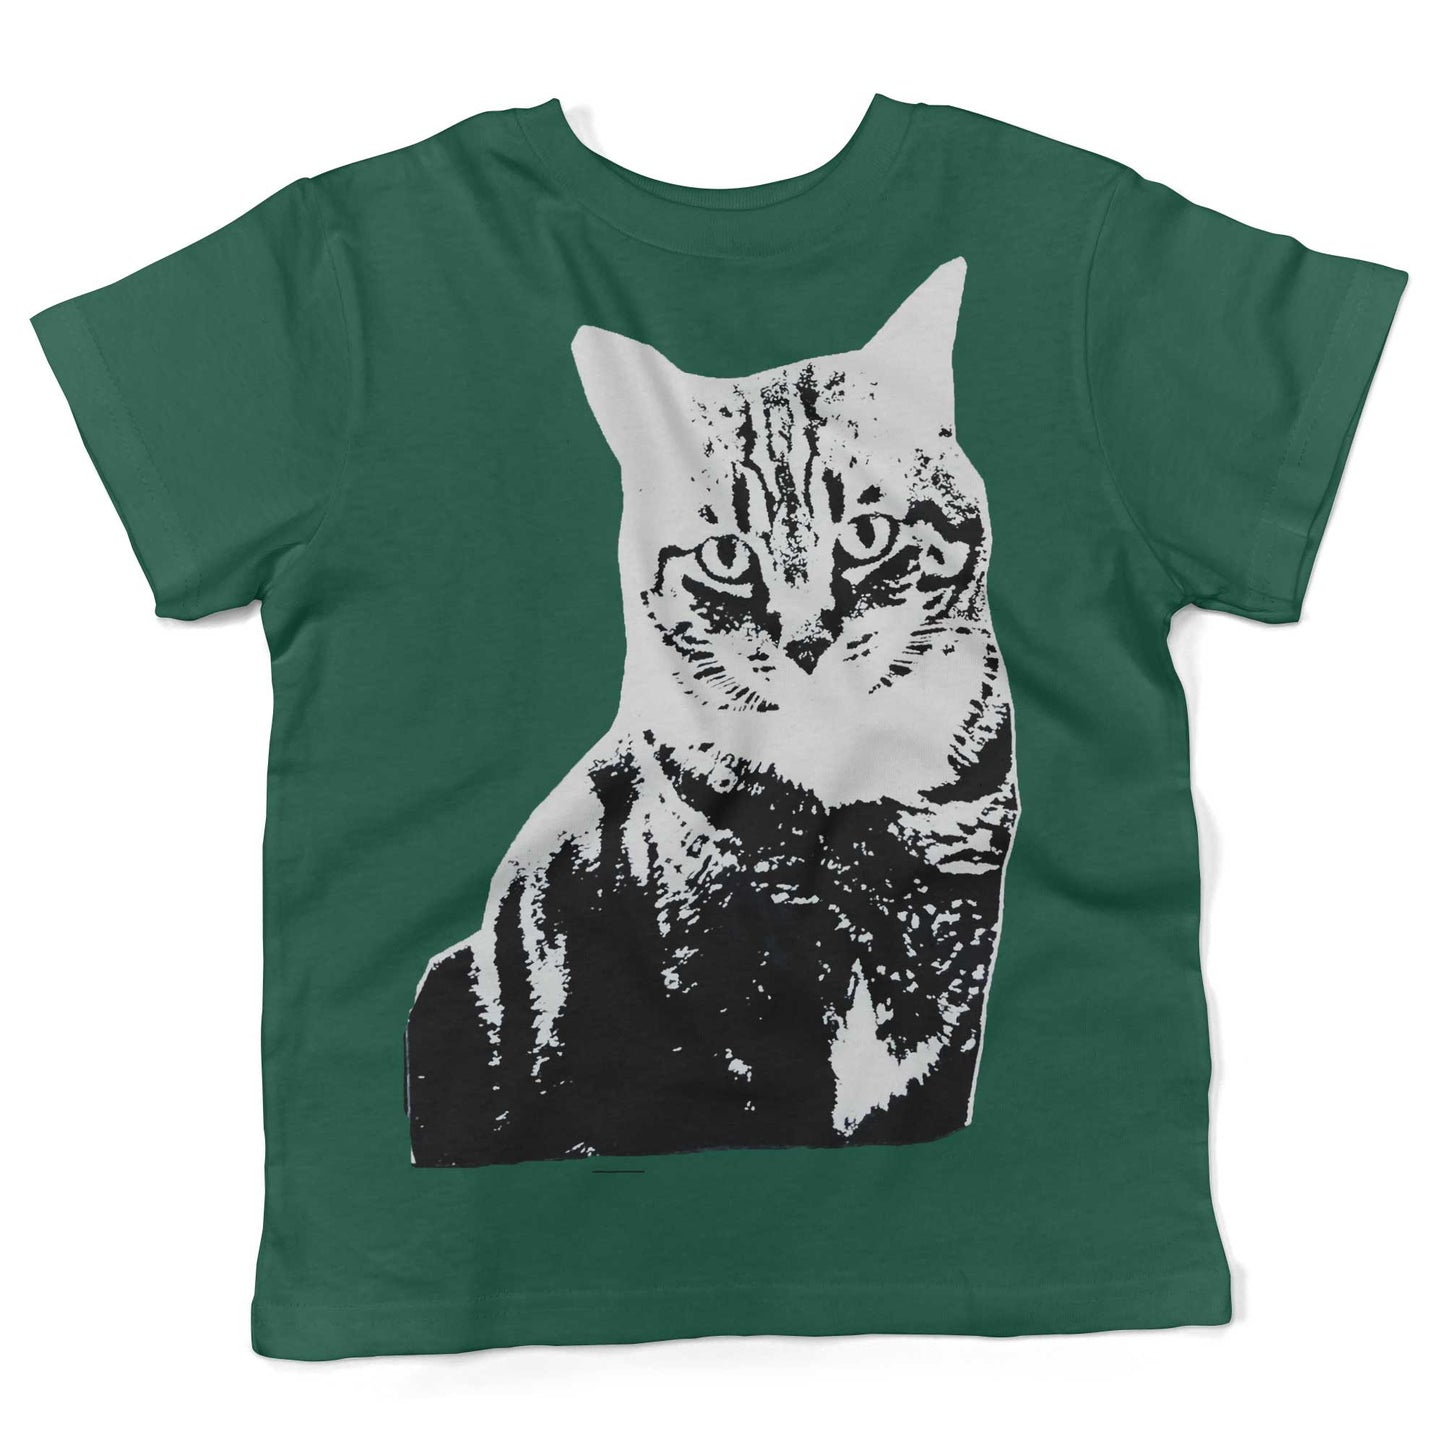 Black & White Cat Toddler Shirt-Kelly Green-2T